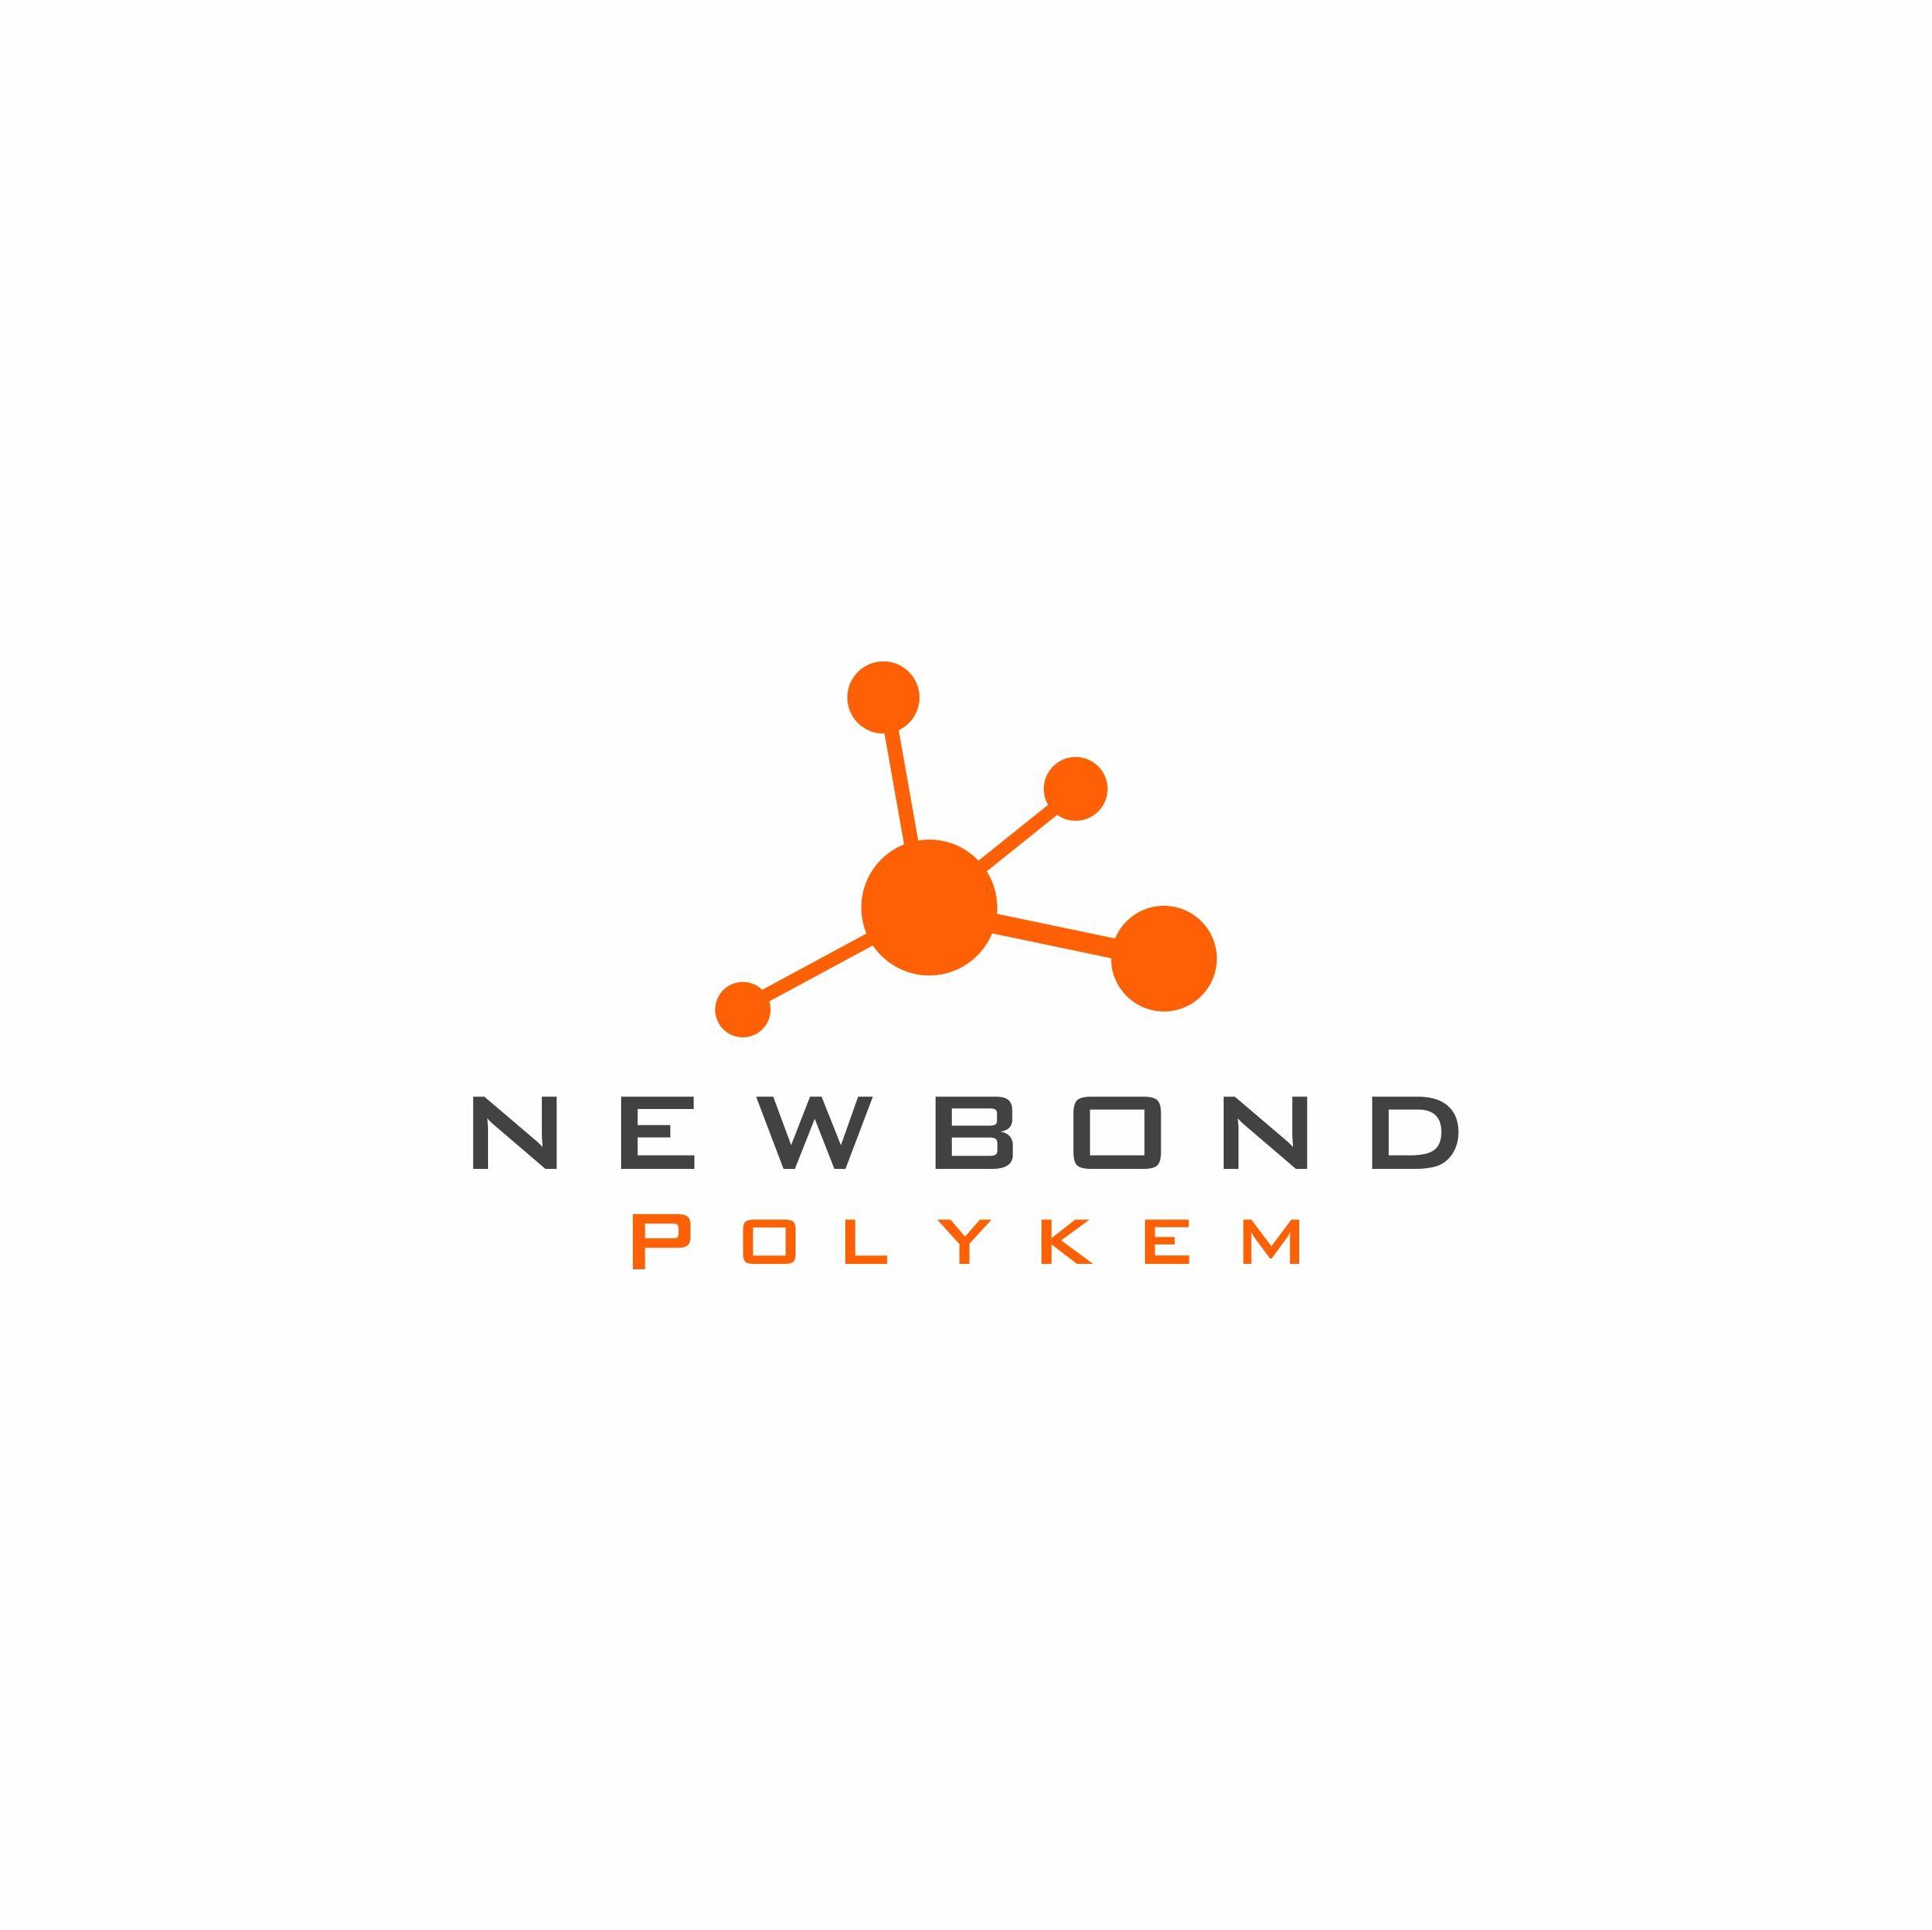 Chemical Company Logo - NewBond Polykem : Chemical Company logo concept #logo #logos